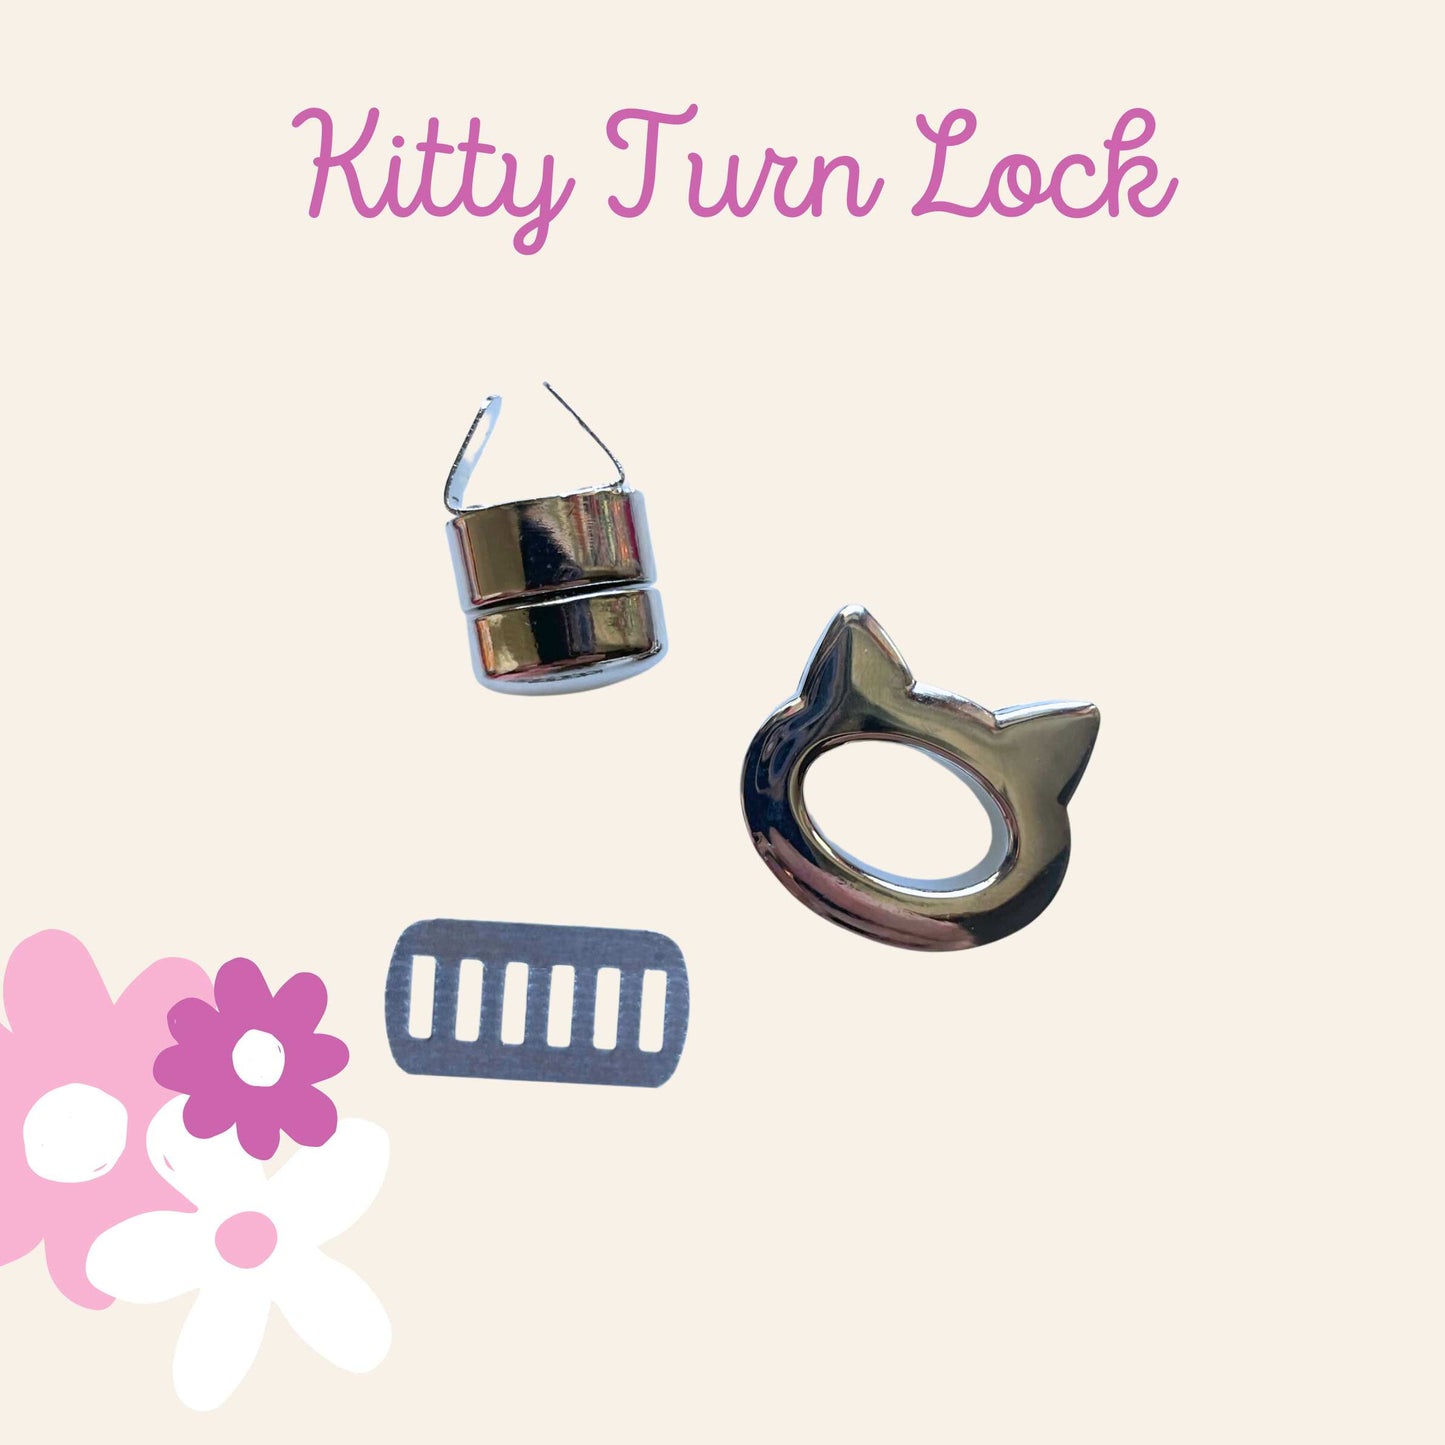 Kitty Turn Lock nickel silver